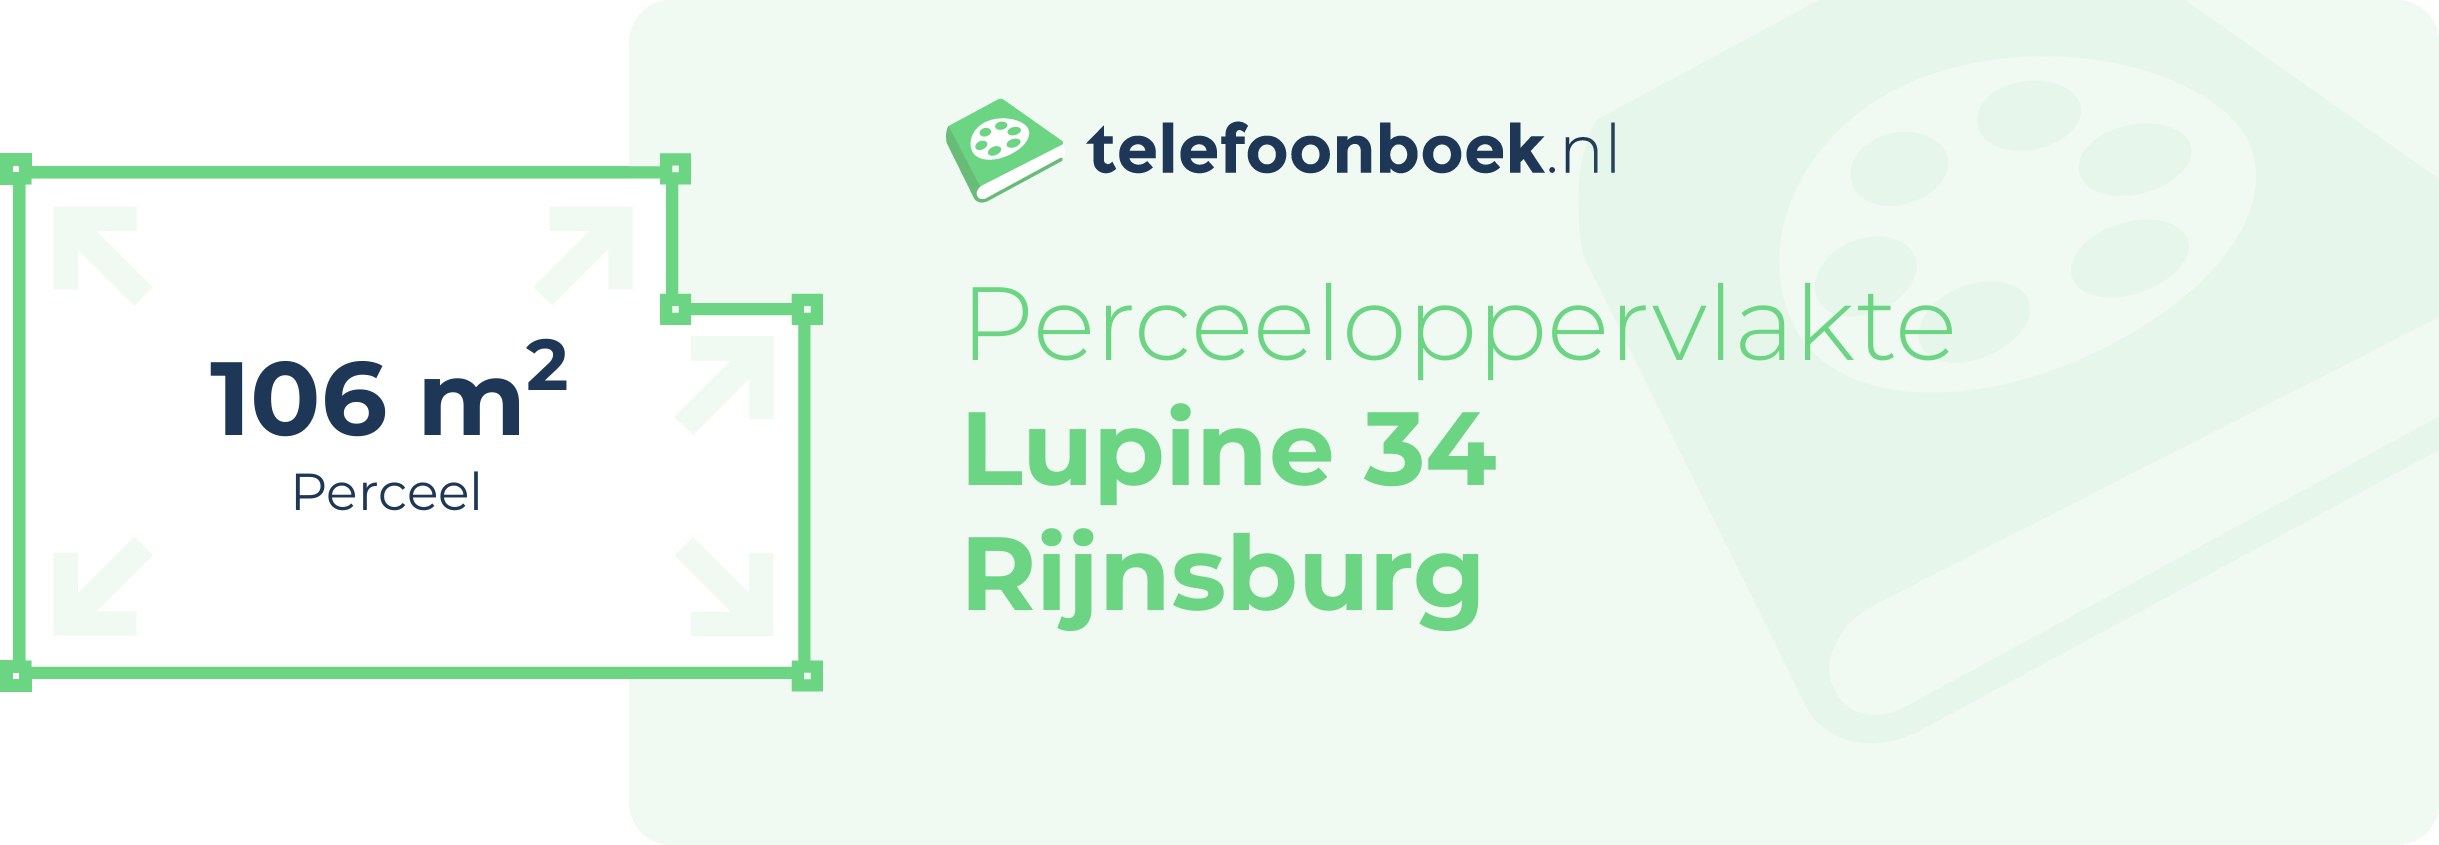 Perceeloppervlakte Lupine 34 Rijnsburg